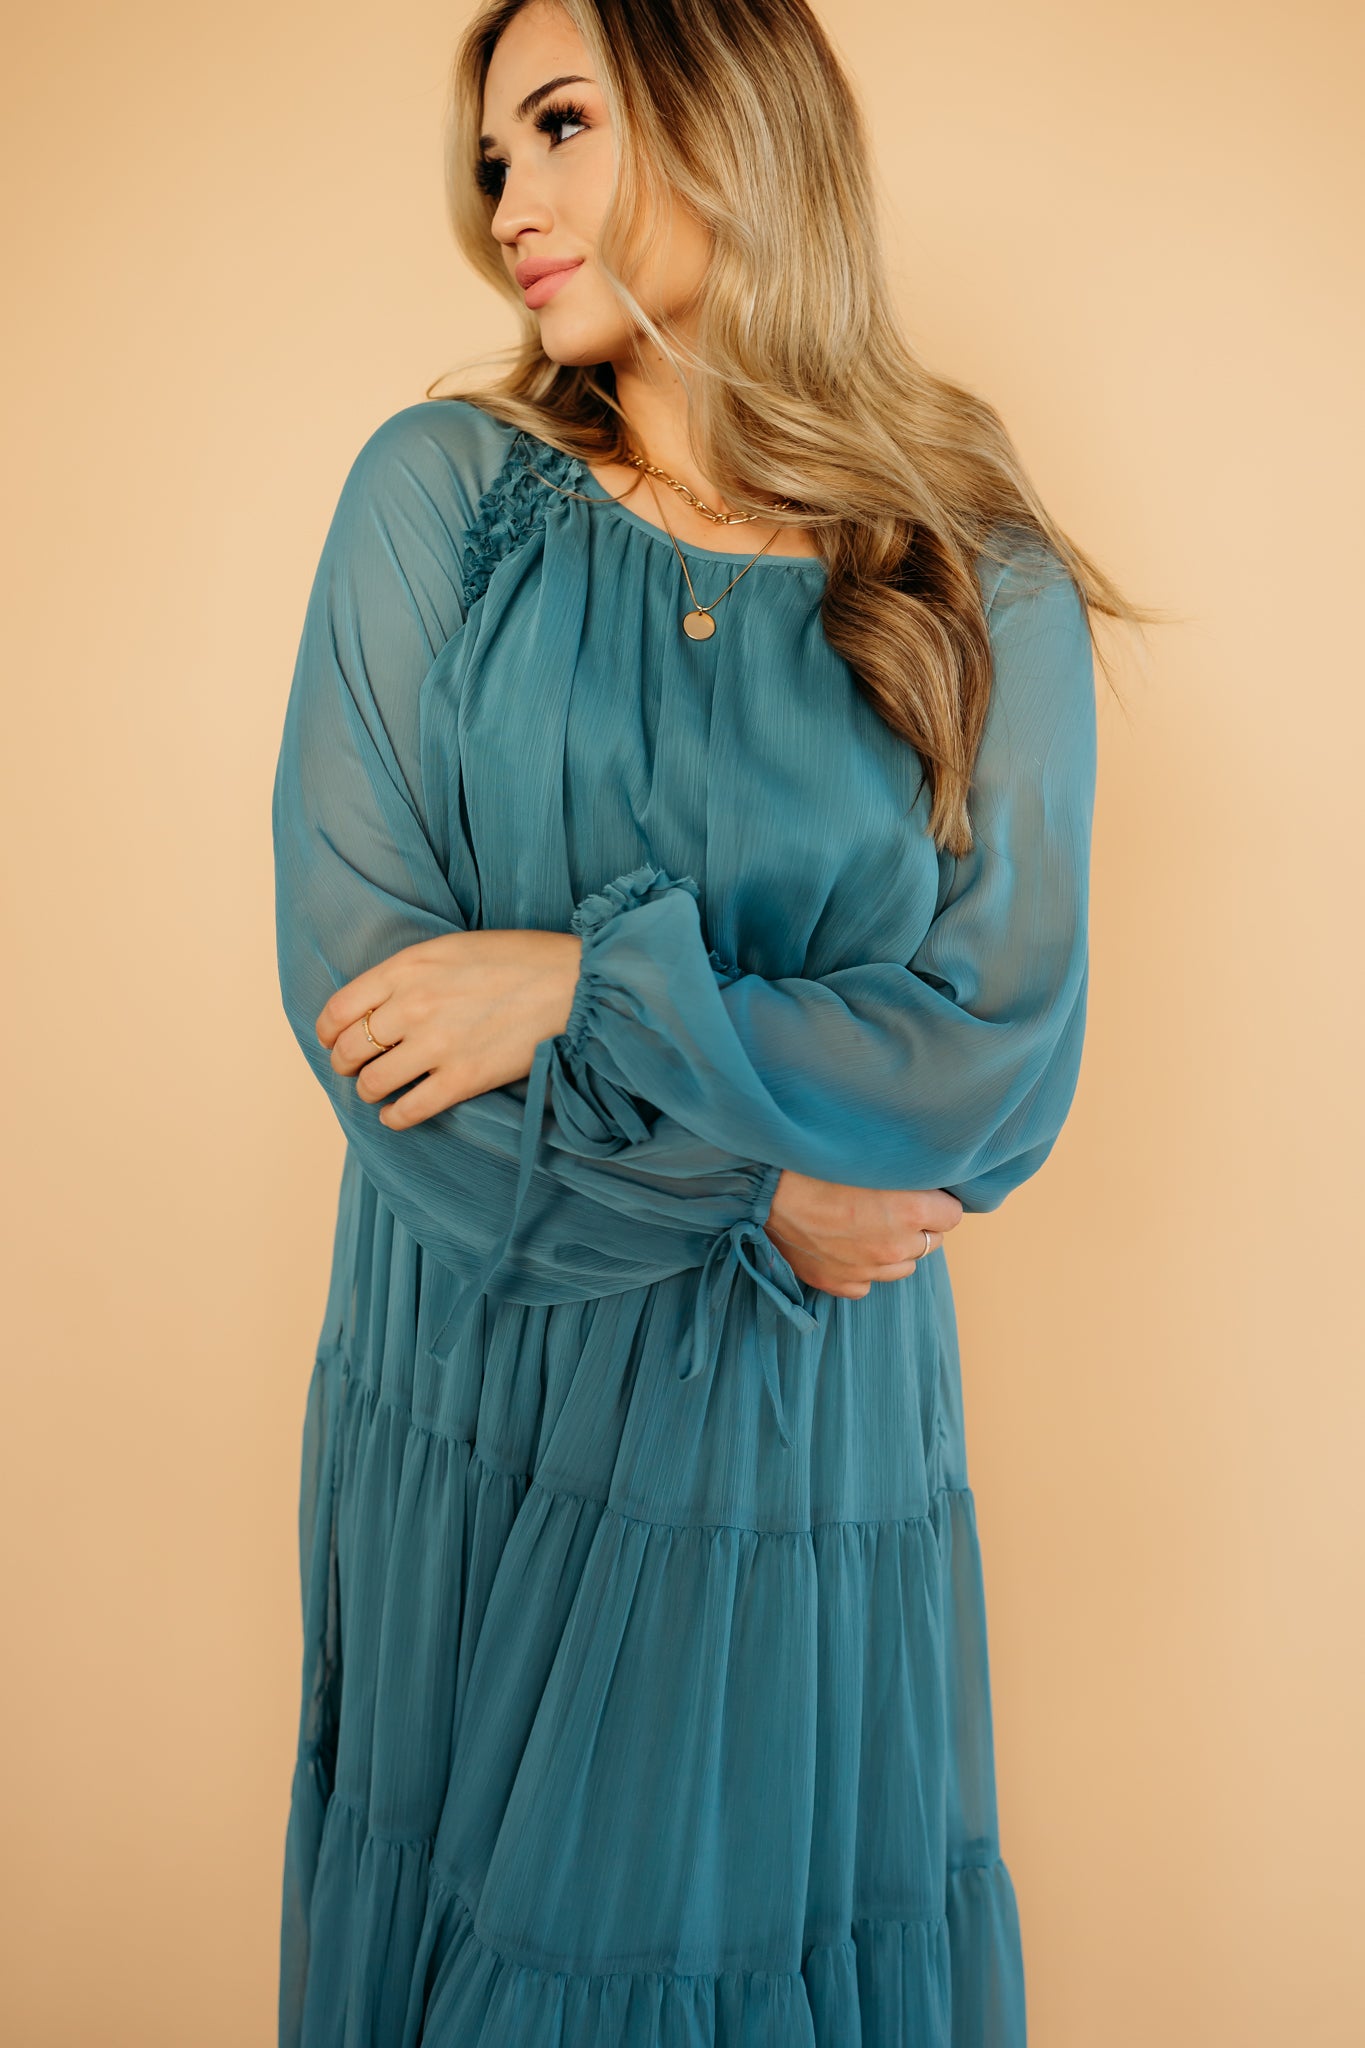 Turquoise ruffle dress for fall | PINK DESERT